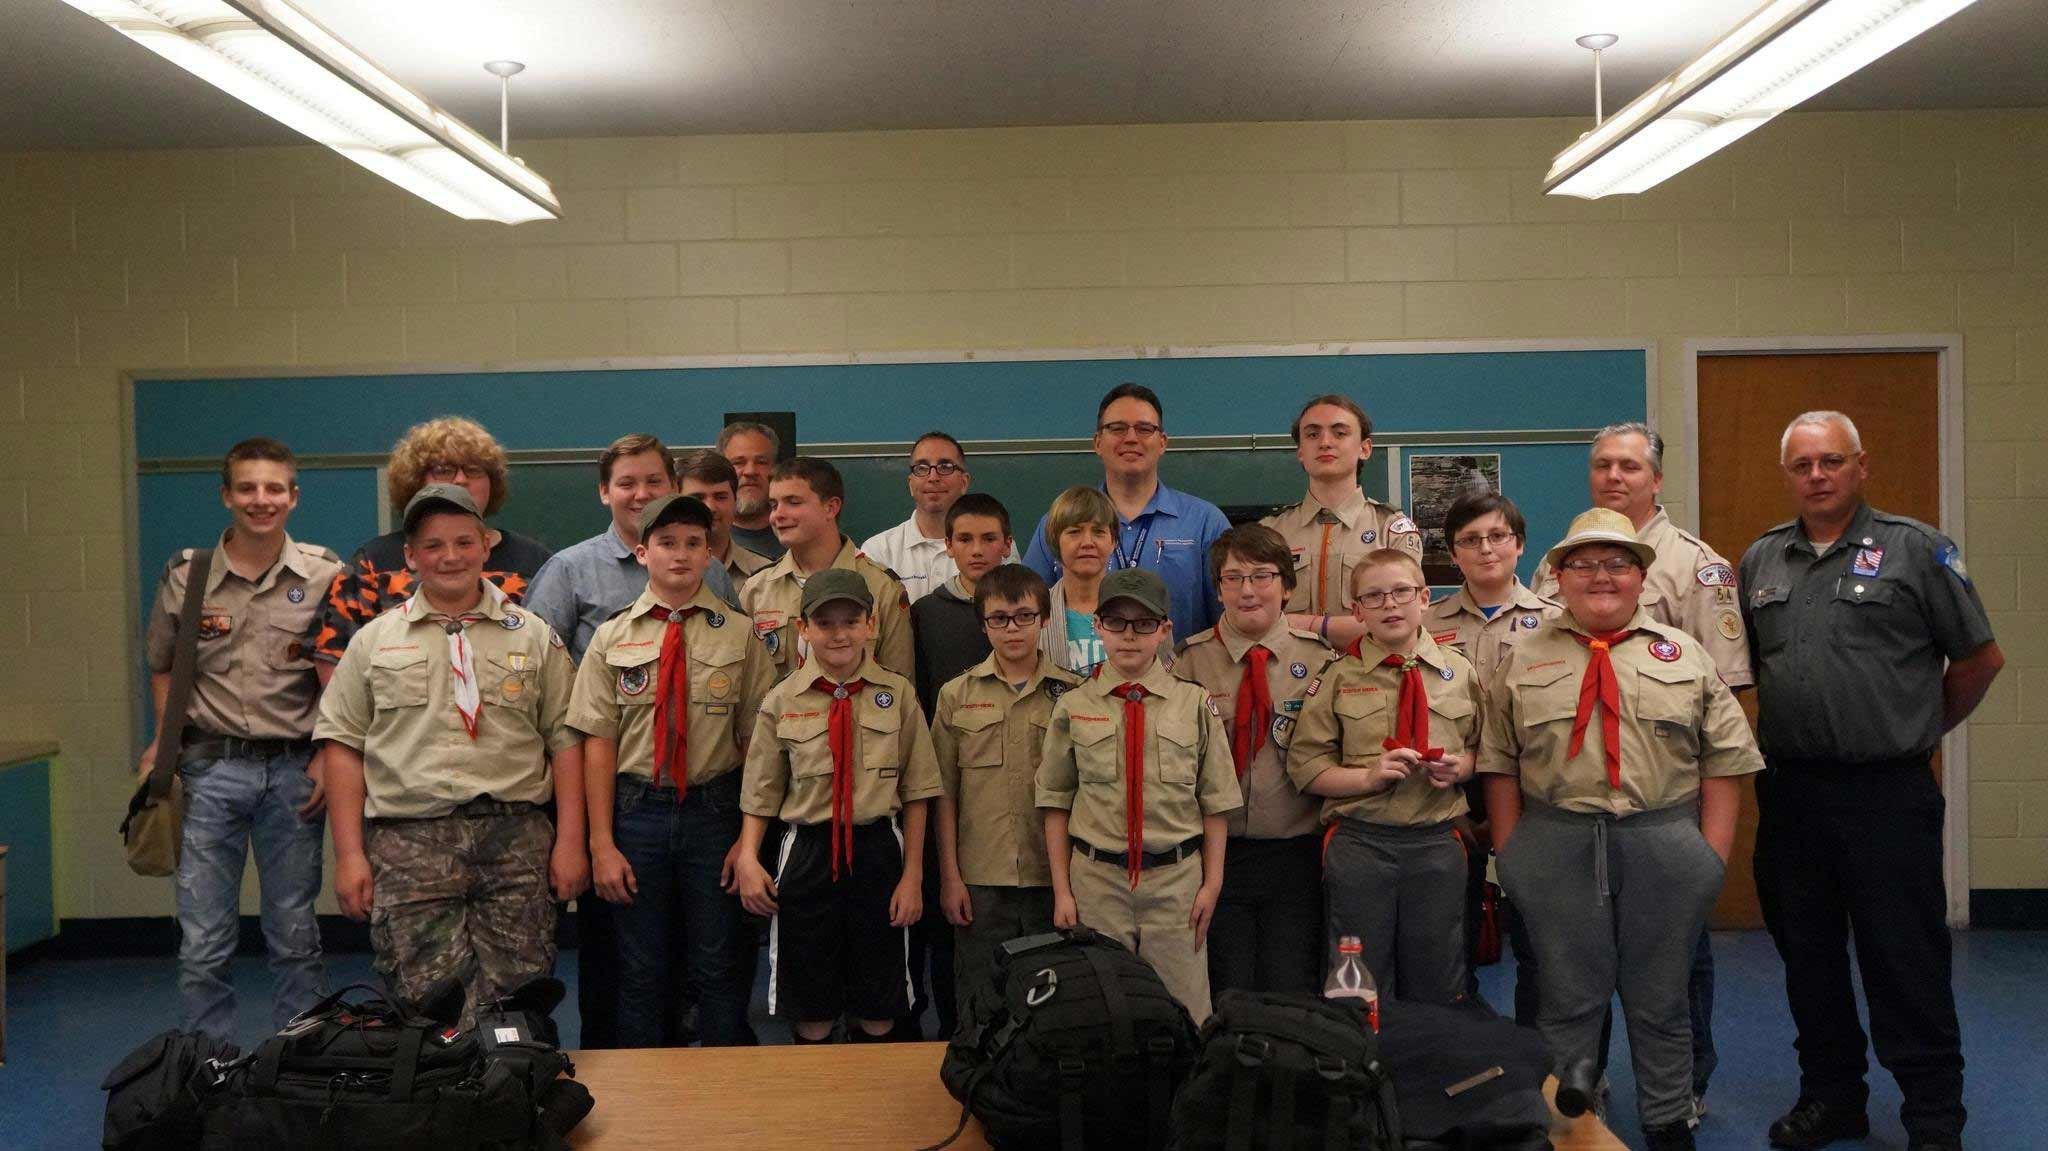 Plainfield Boy Scouts Undergo Training